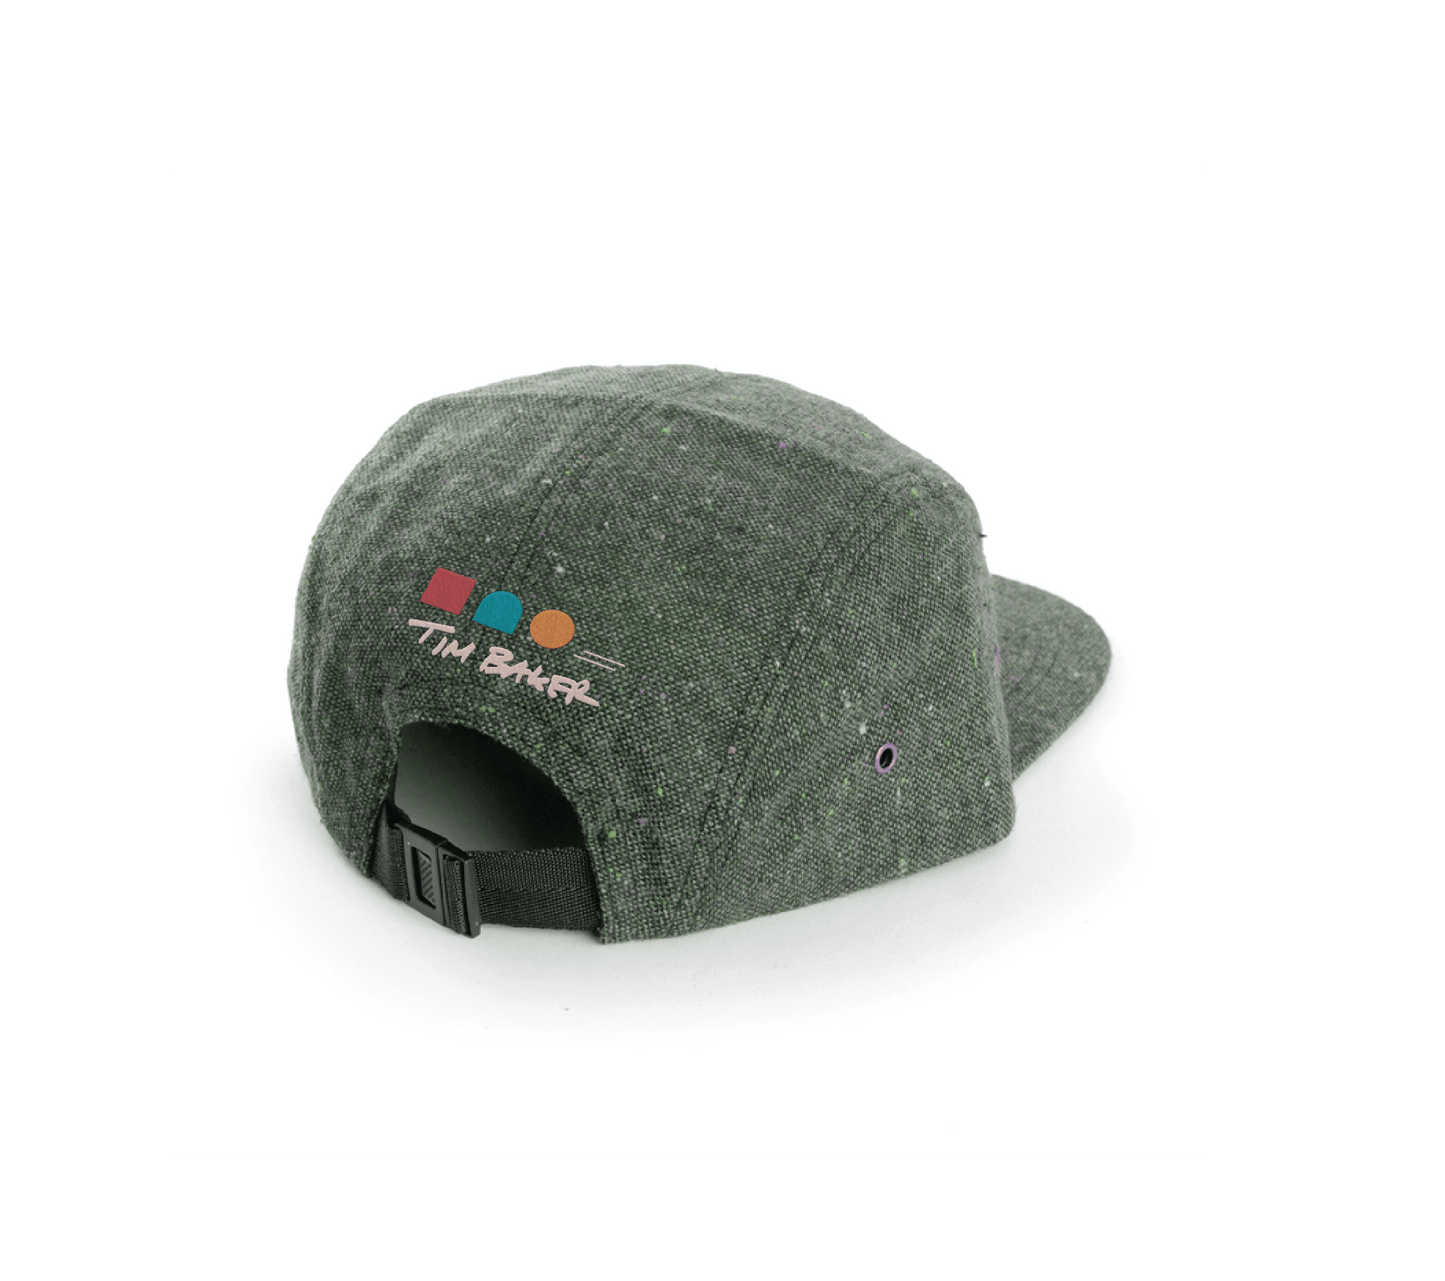 The Festival 5-Panel Green Hat